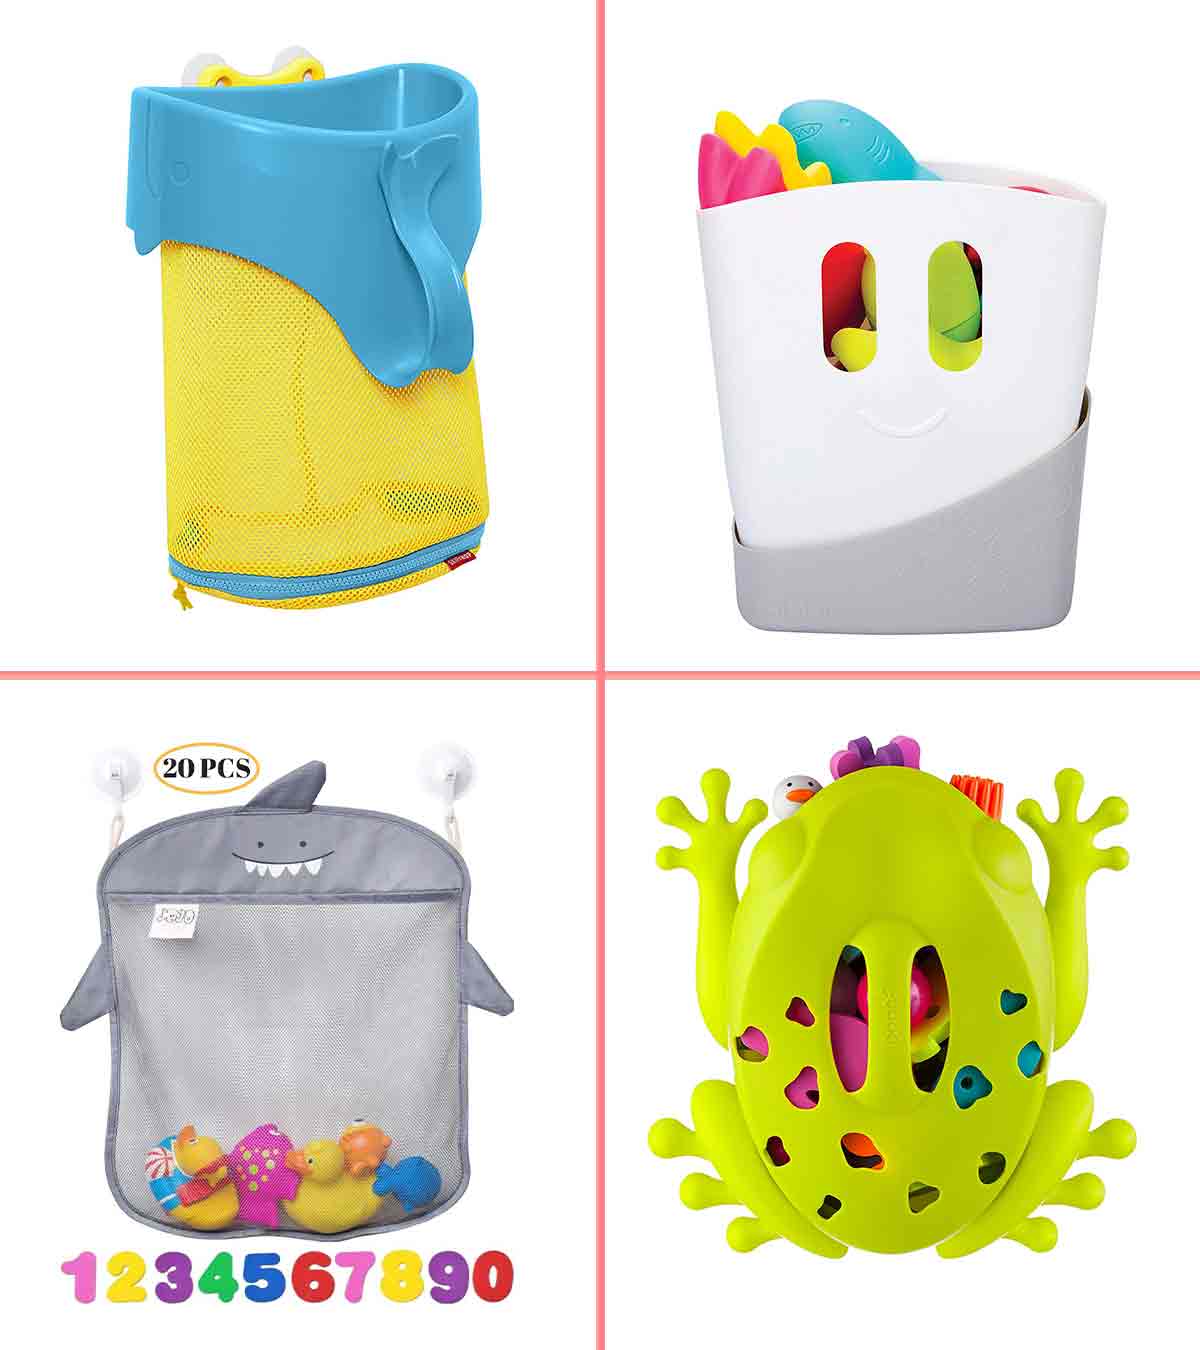 4 Soap Pockets with Suction Hooks Yihoon Bath Toy Organizer Shower Caddy for Bathroom Baby Toy Storage Quick Dry Bathtub Mesh Net